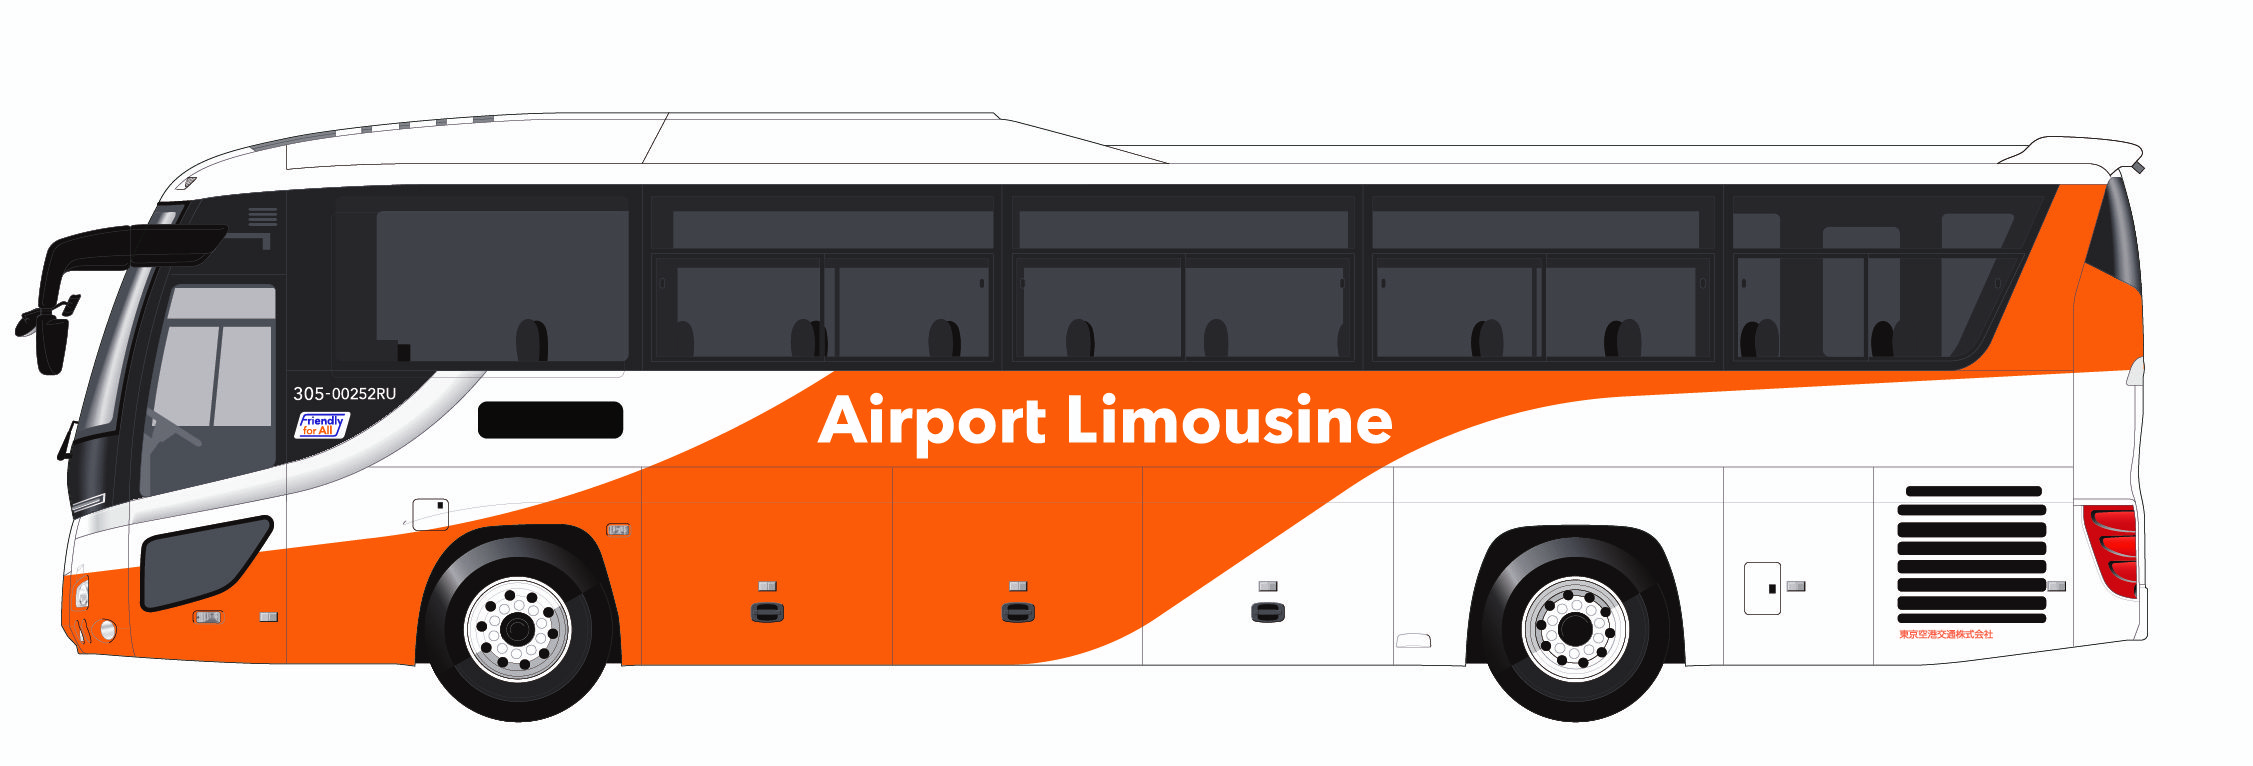 Airport Limousine Bus・成田空港到着